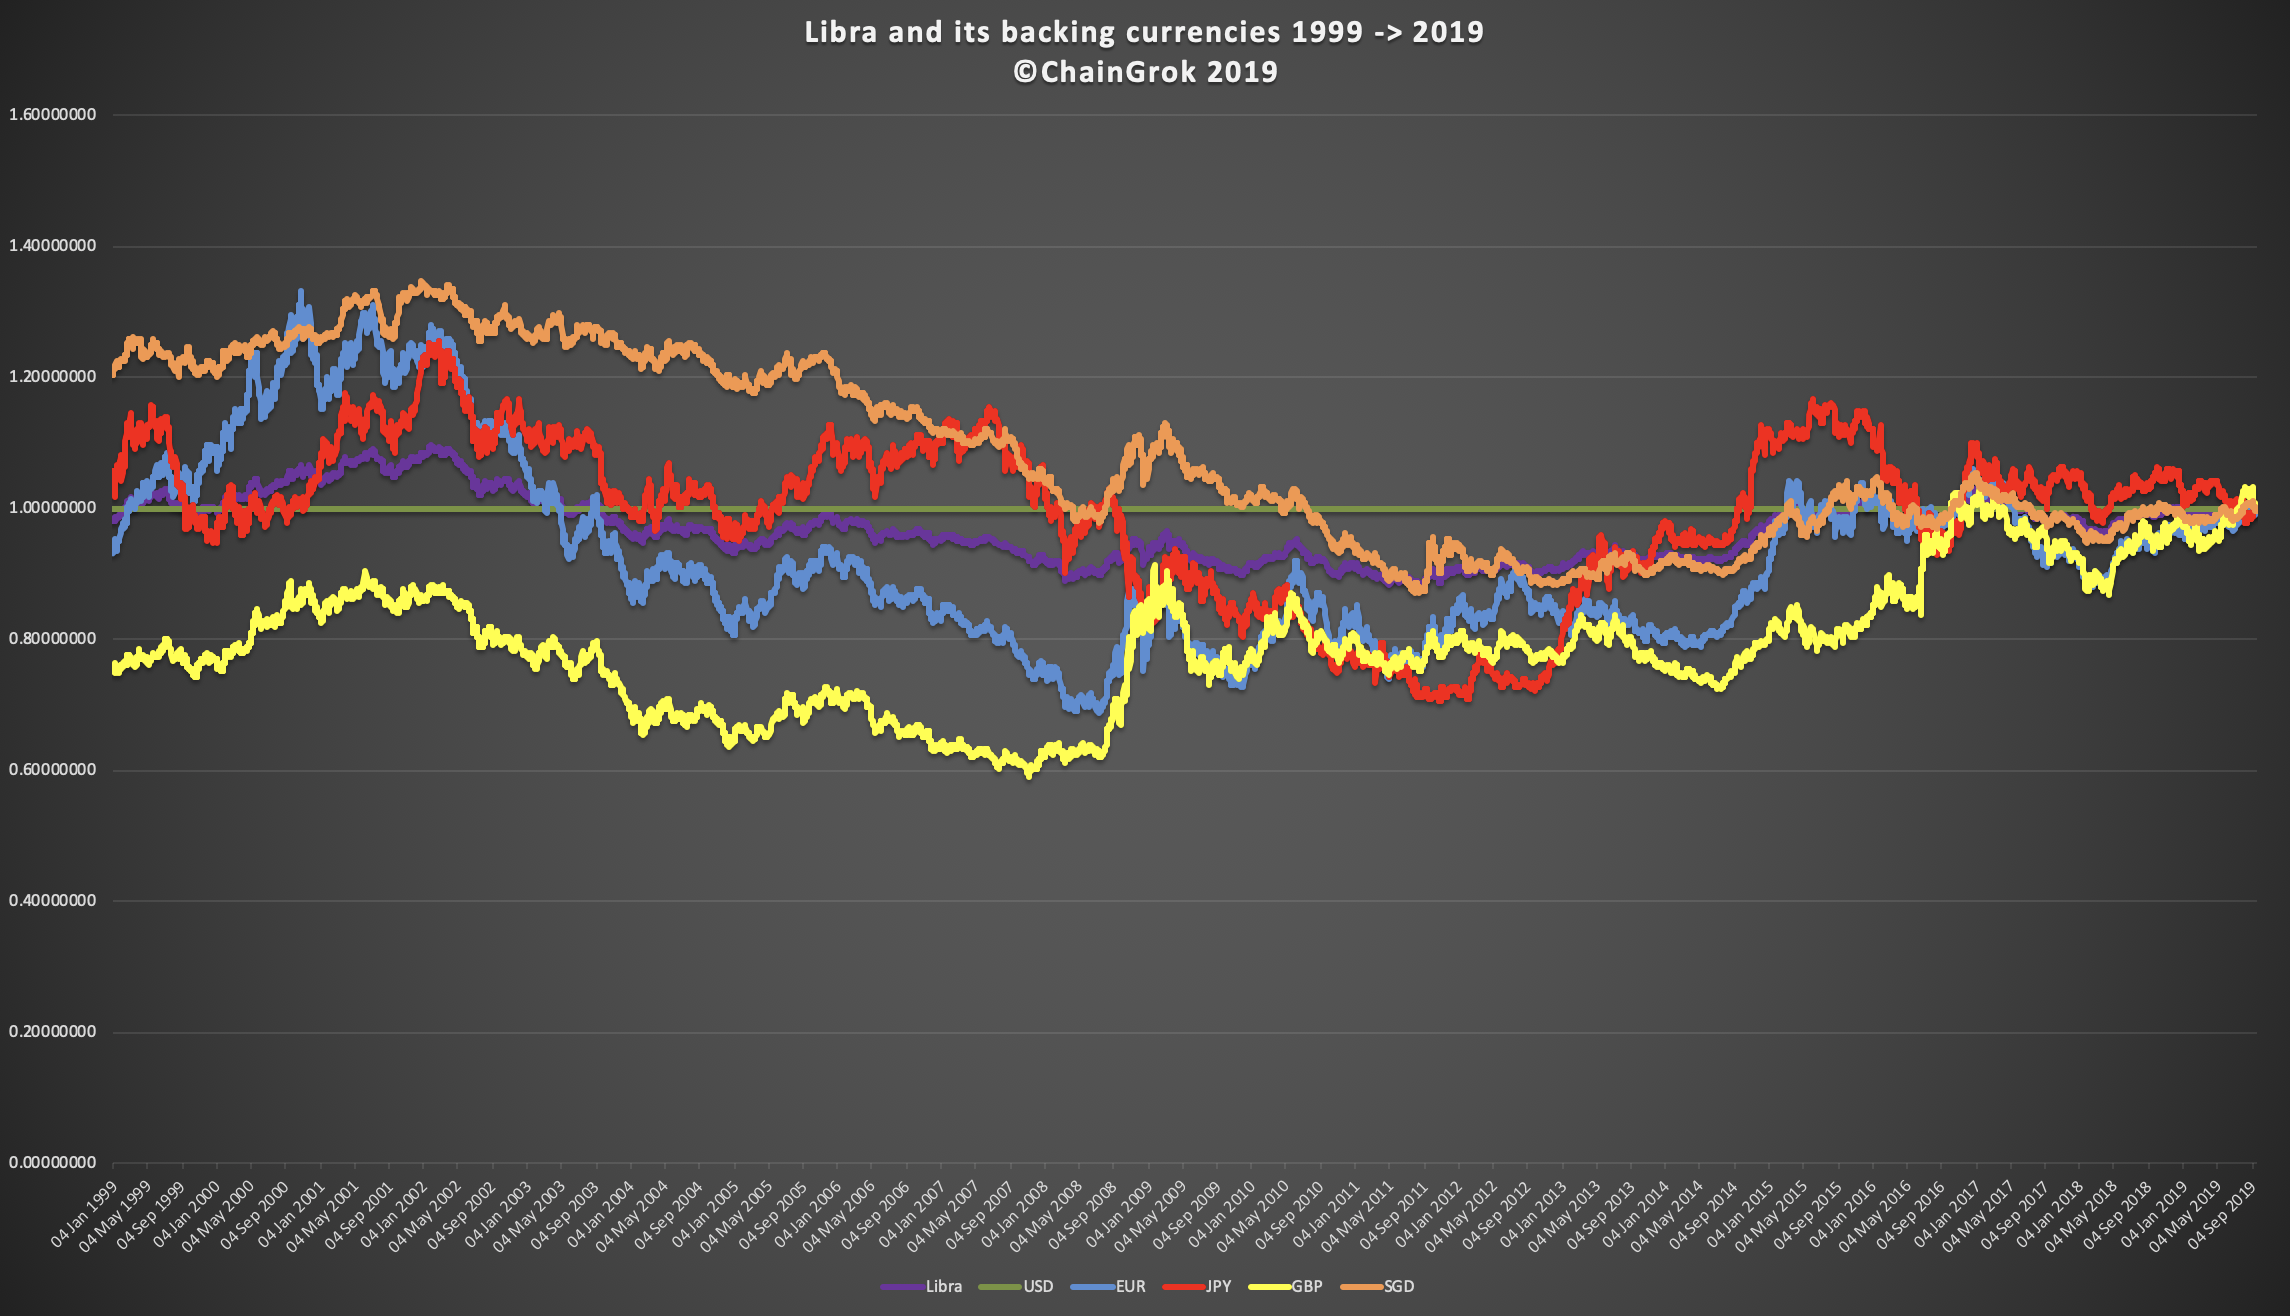 Figure 1 - Libra and basket currencies versus USD: 1999 -> 2019